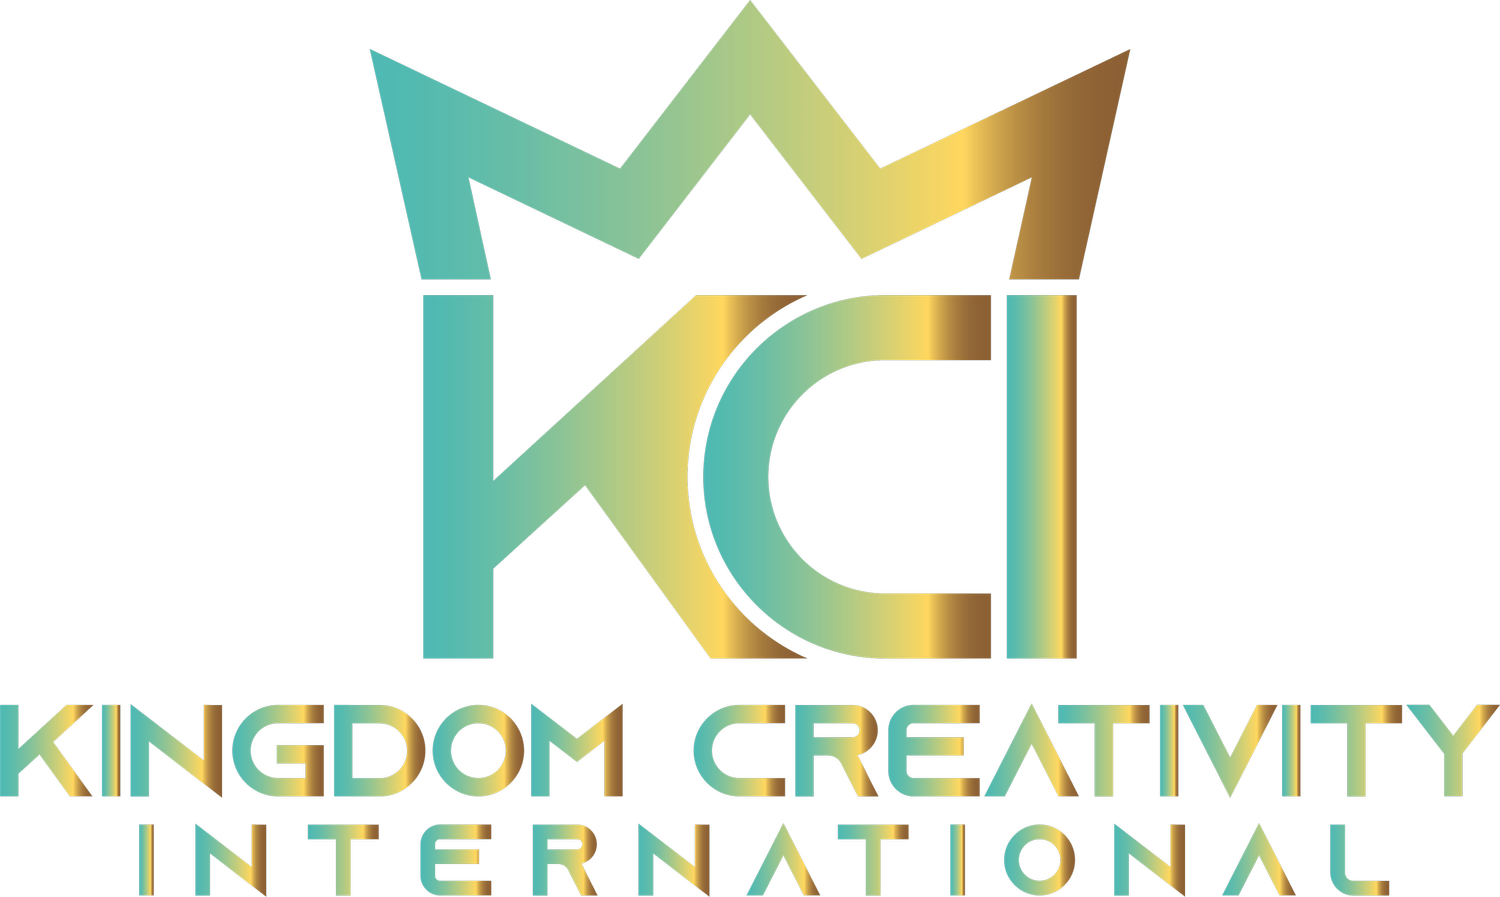 Kingdom Creativity International